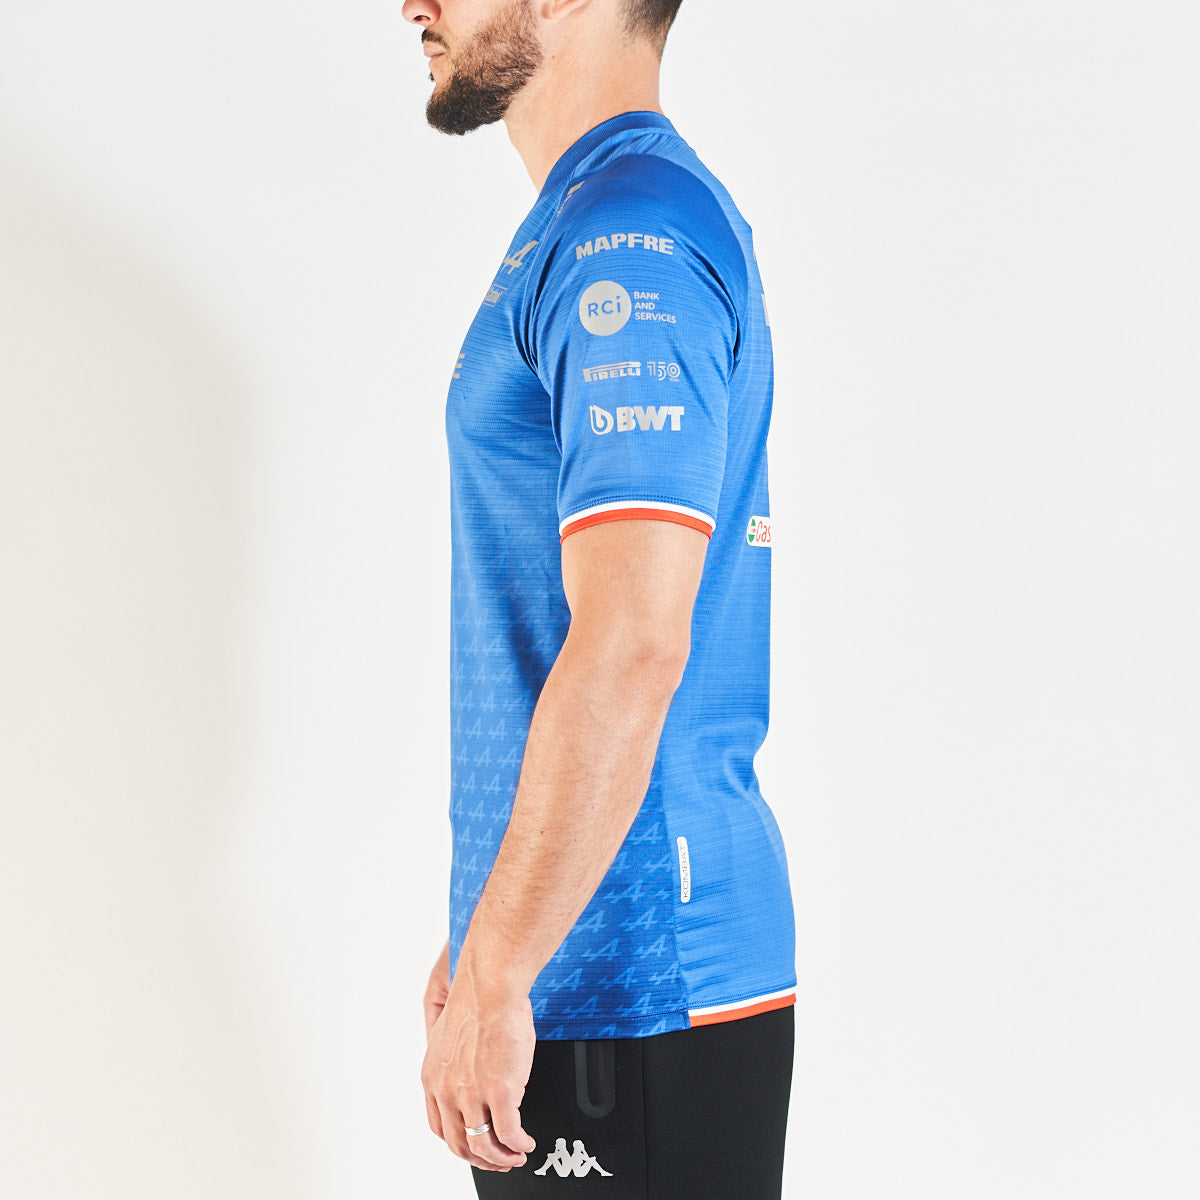 Camiseta BWT Alpine F1 Team Pro Kombat Azul Hombre - imagen 3